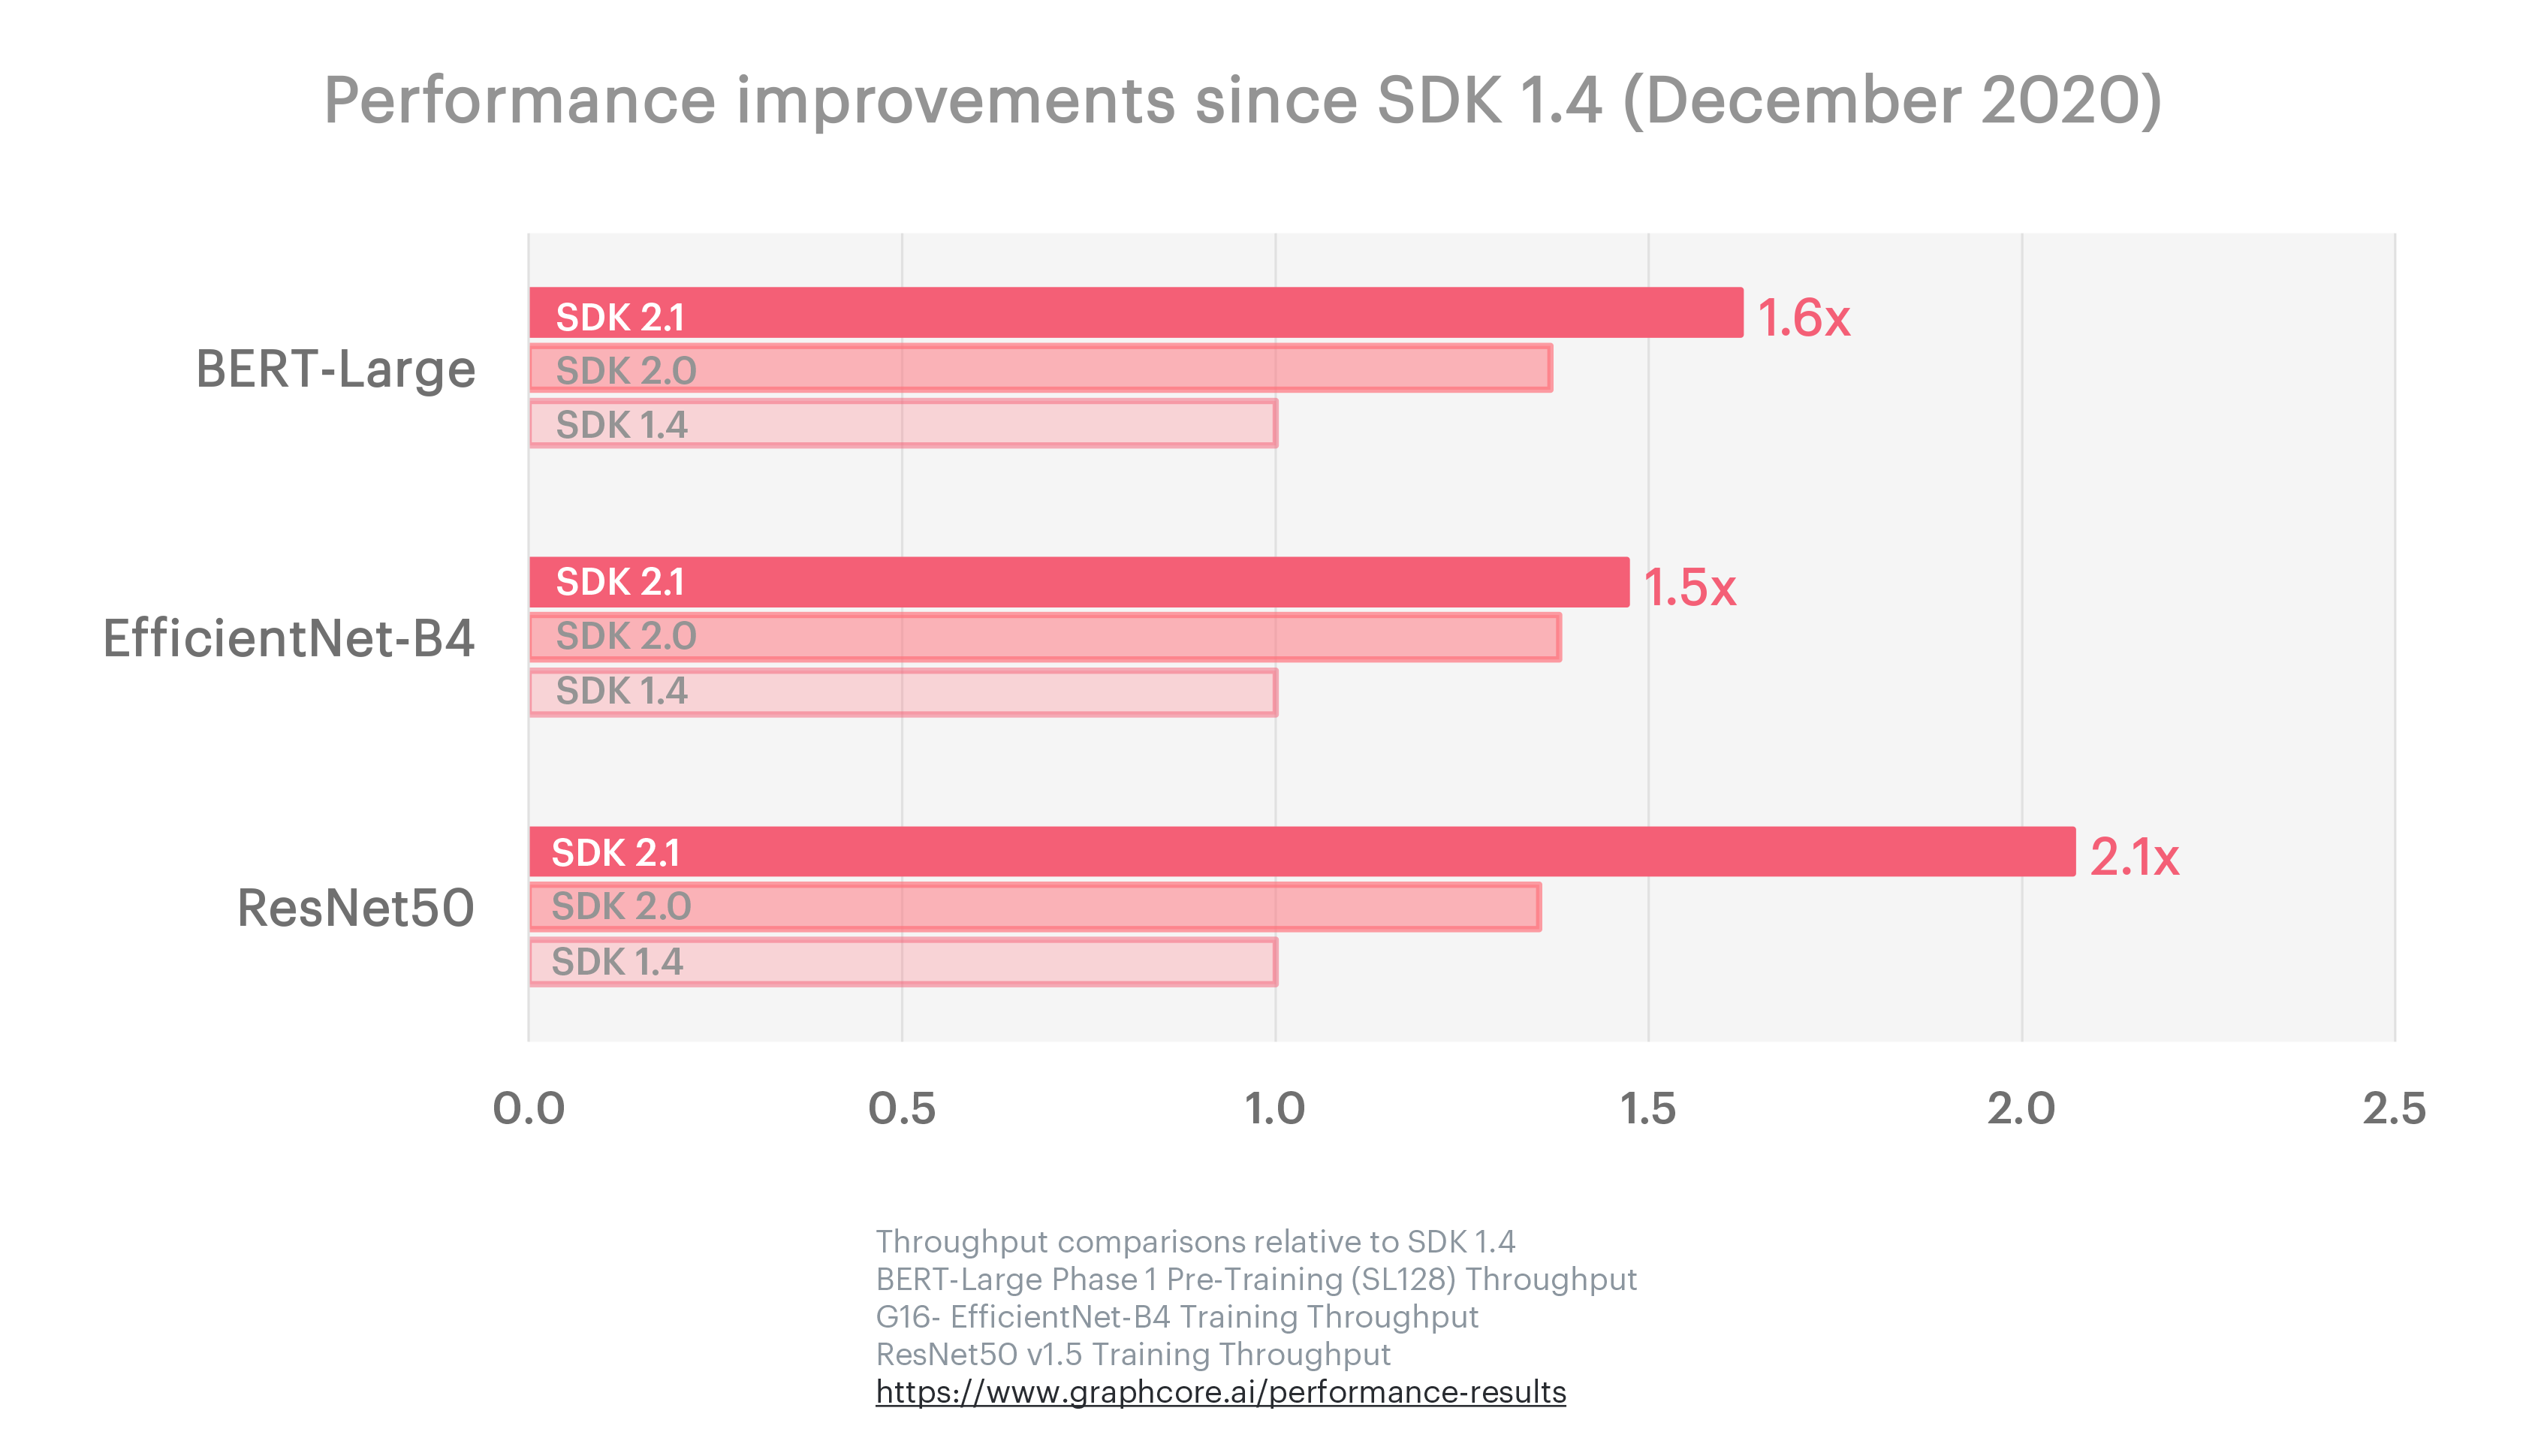 Performance improvements since SDK 1.4 software release